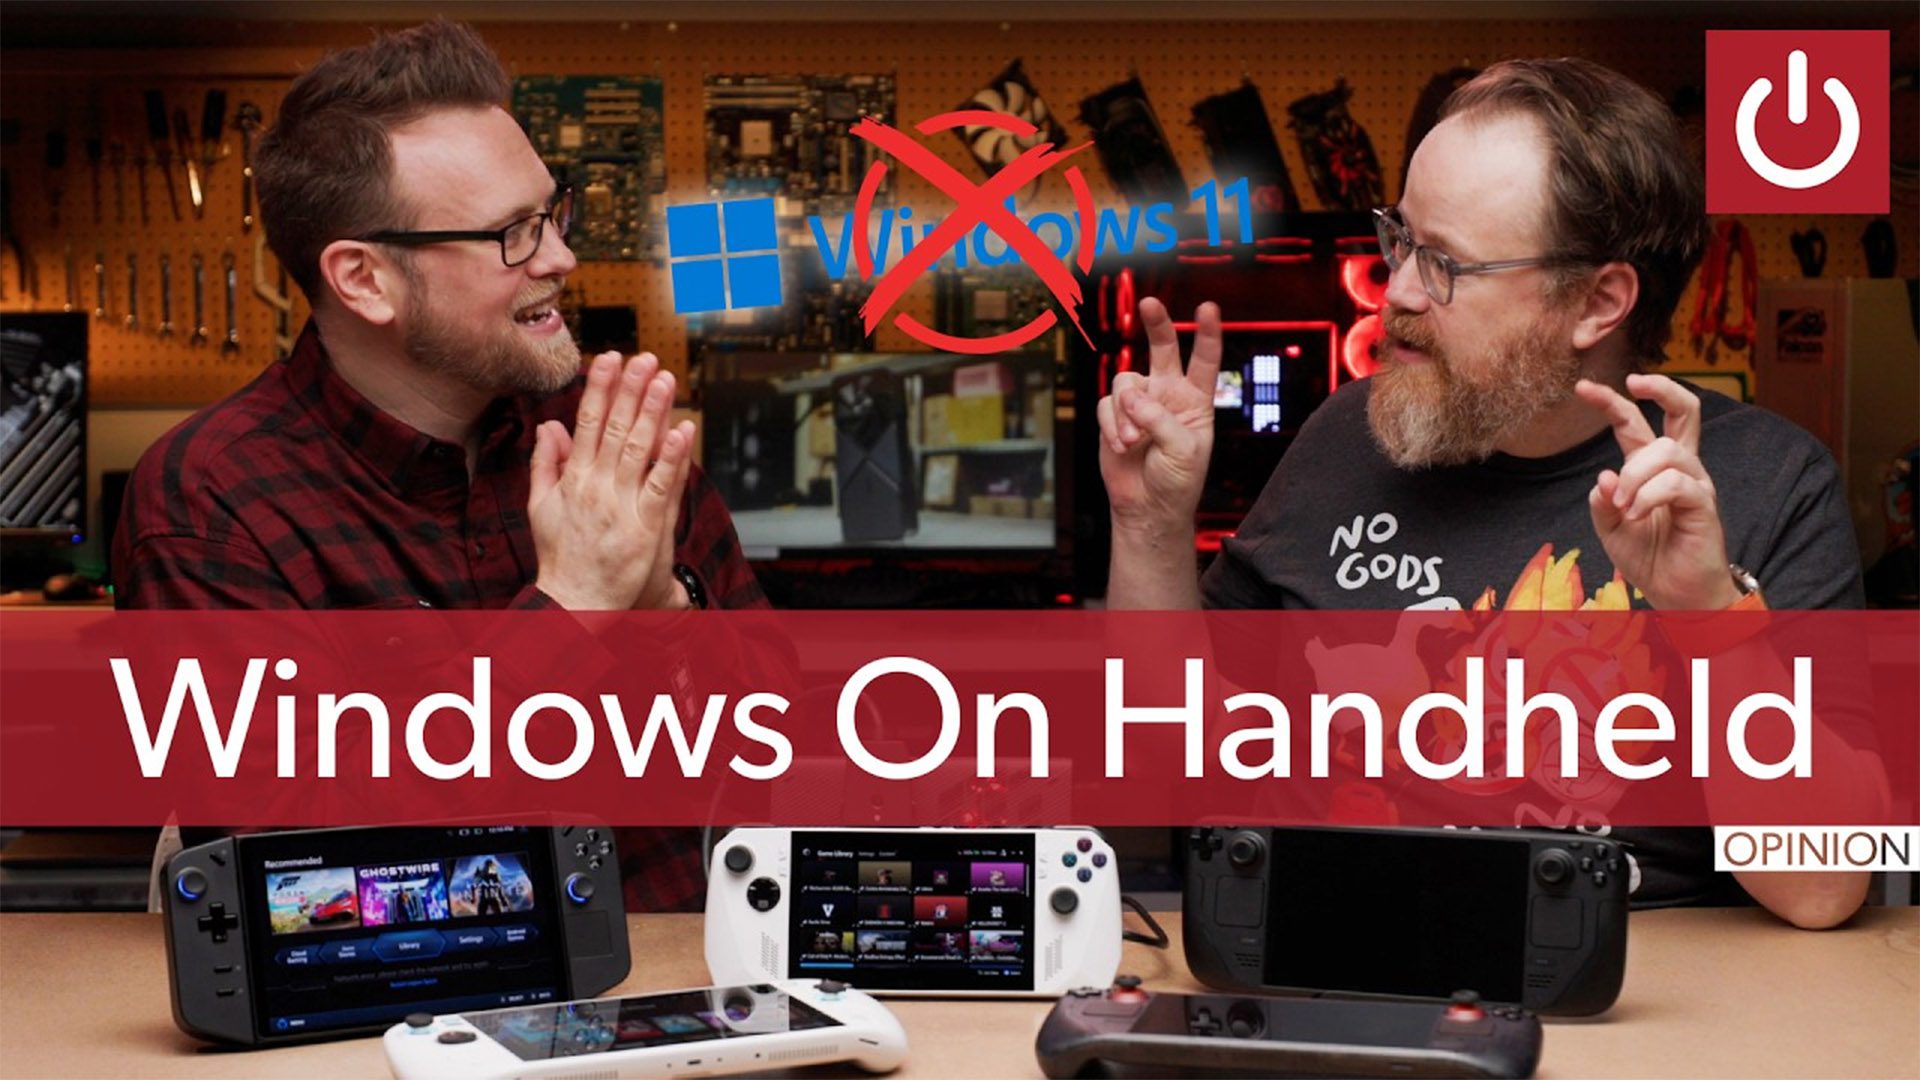 PCWorld debates: Does Windows suck for handheld gaming?